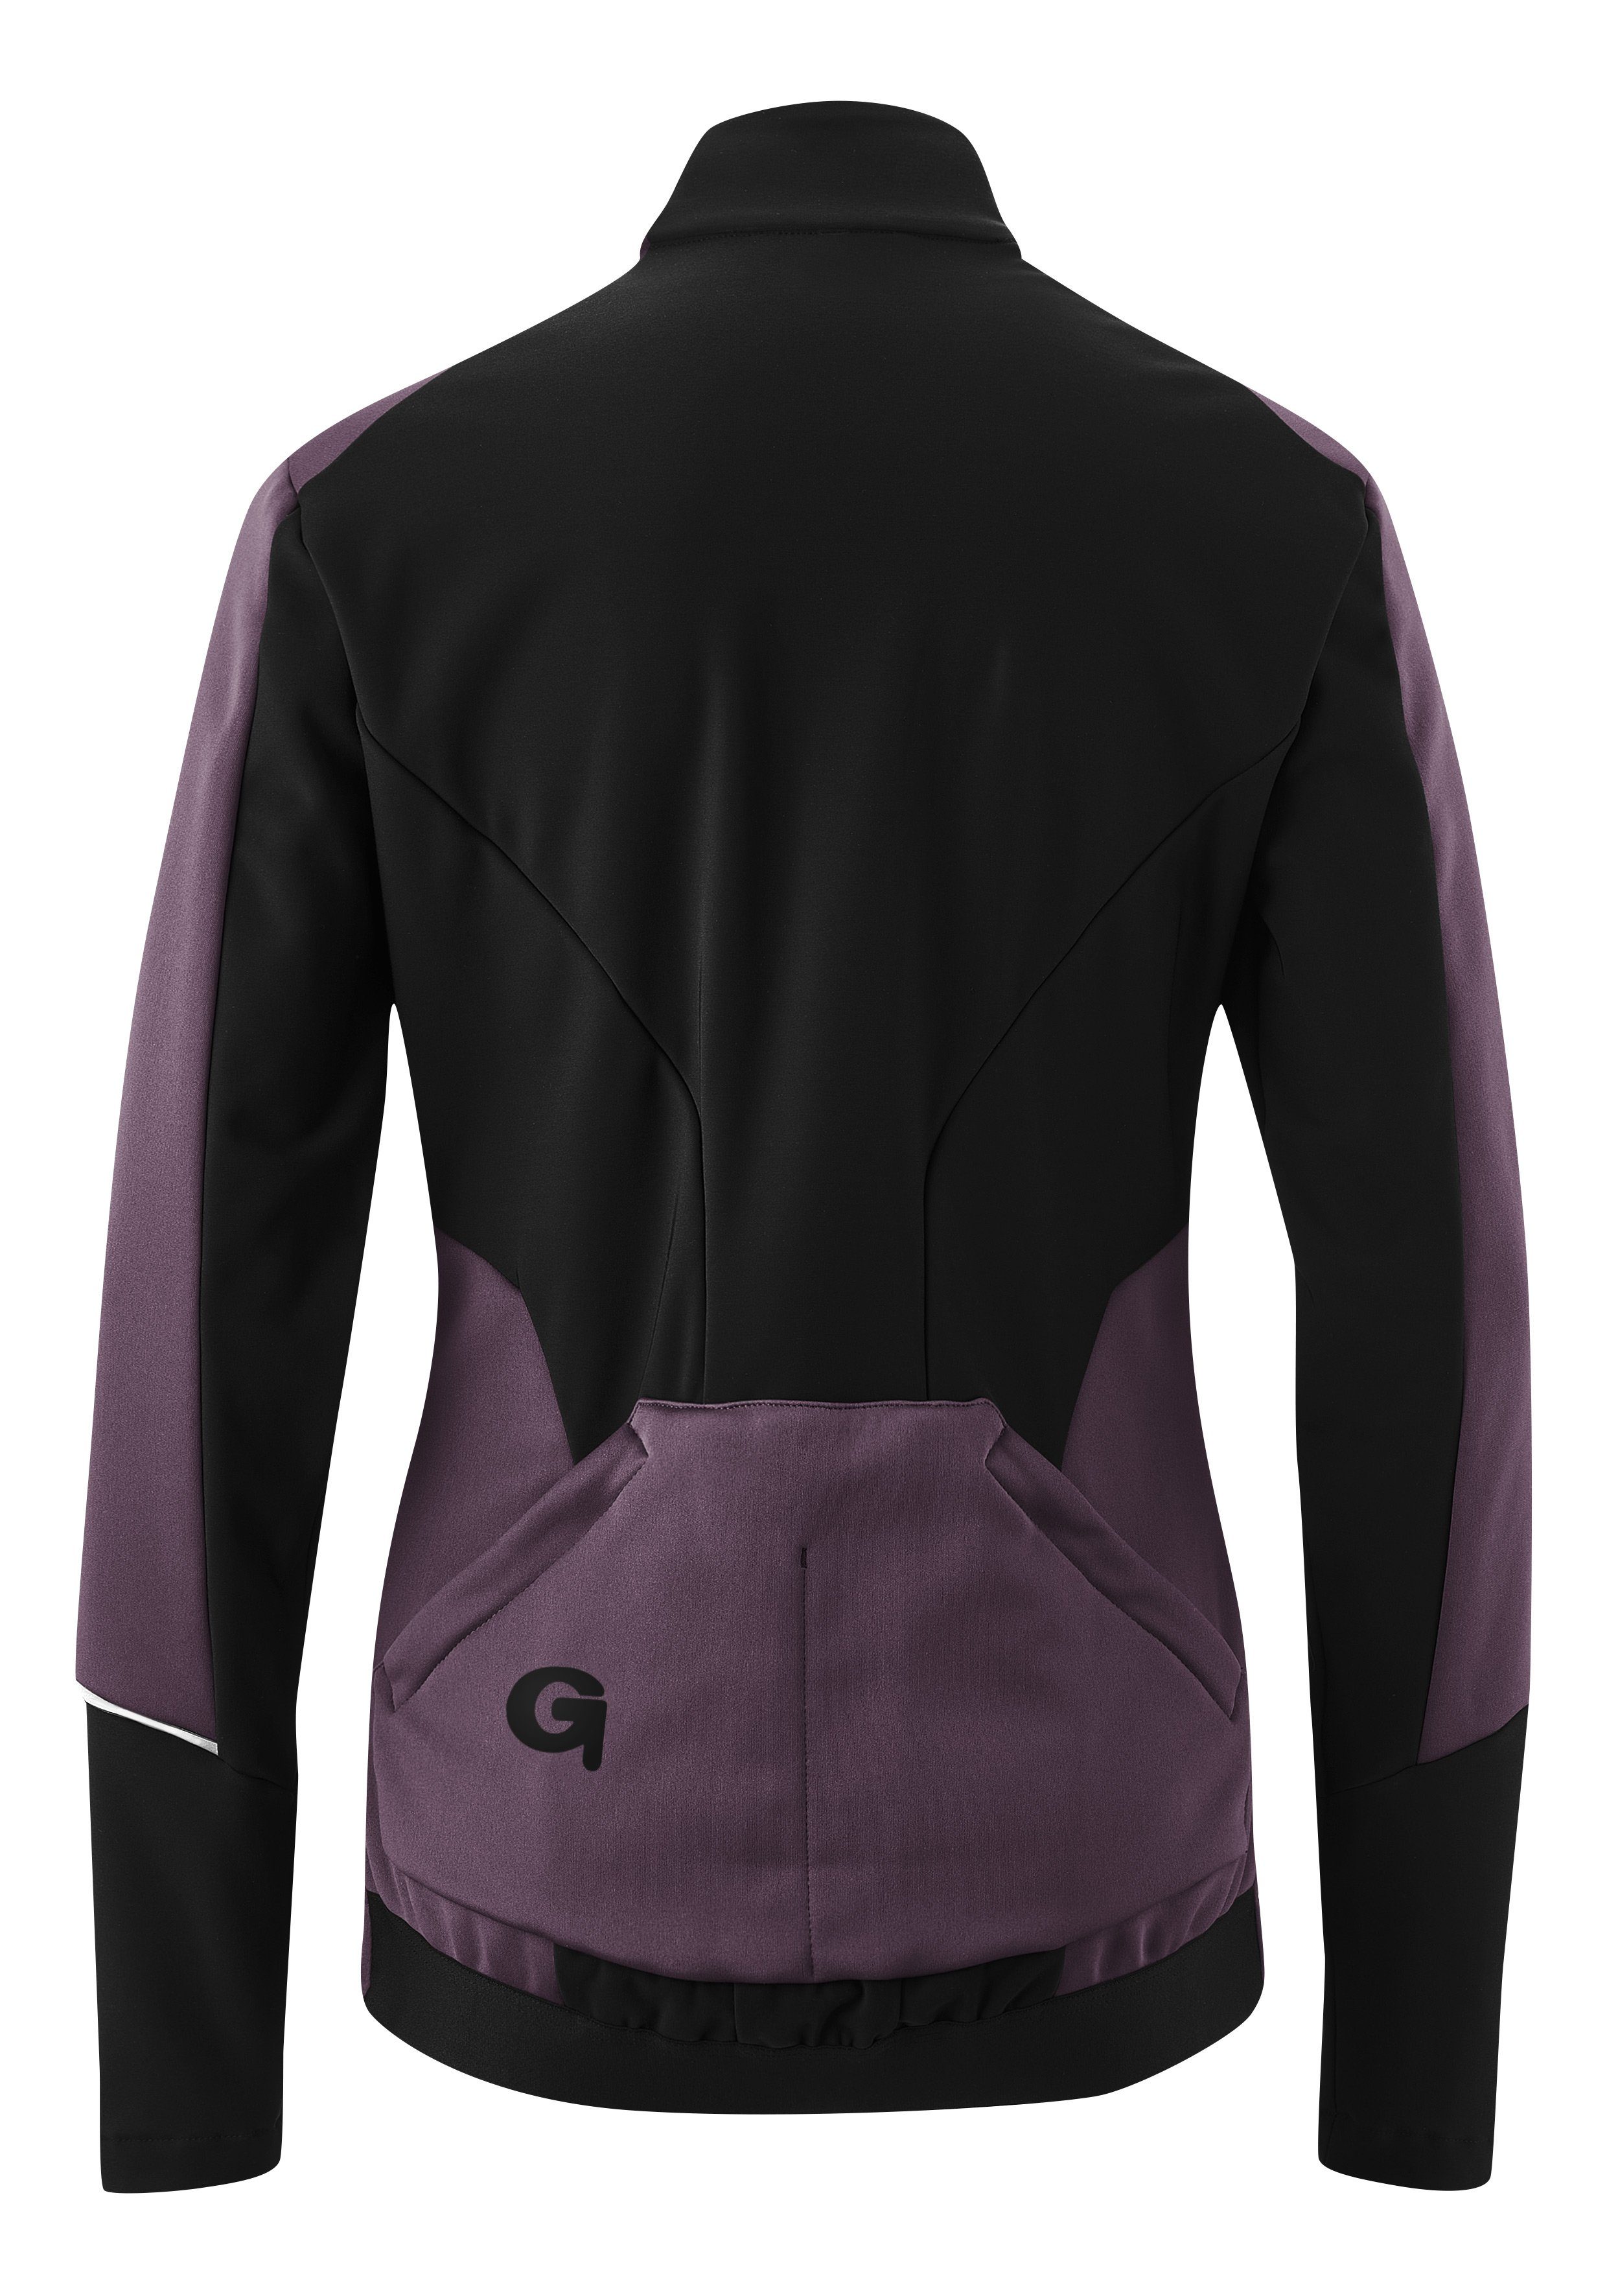 Damen Softshell-Jacke, Gonso FURIANI Windjacke Fahrradjacke wasserabweisend und atmungsaktiv aubergine